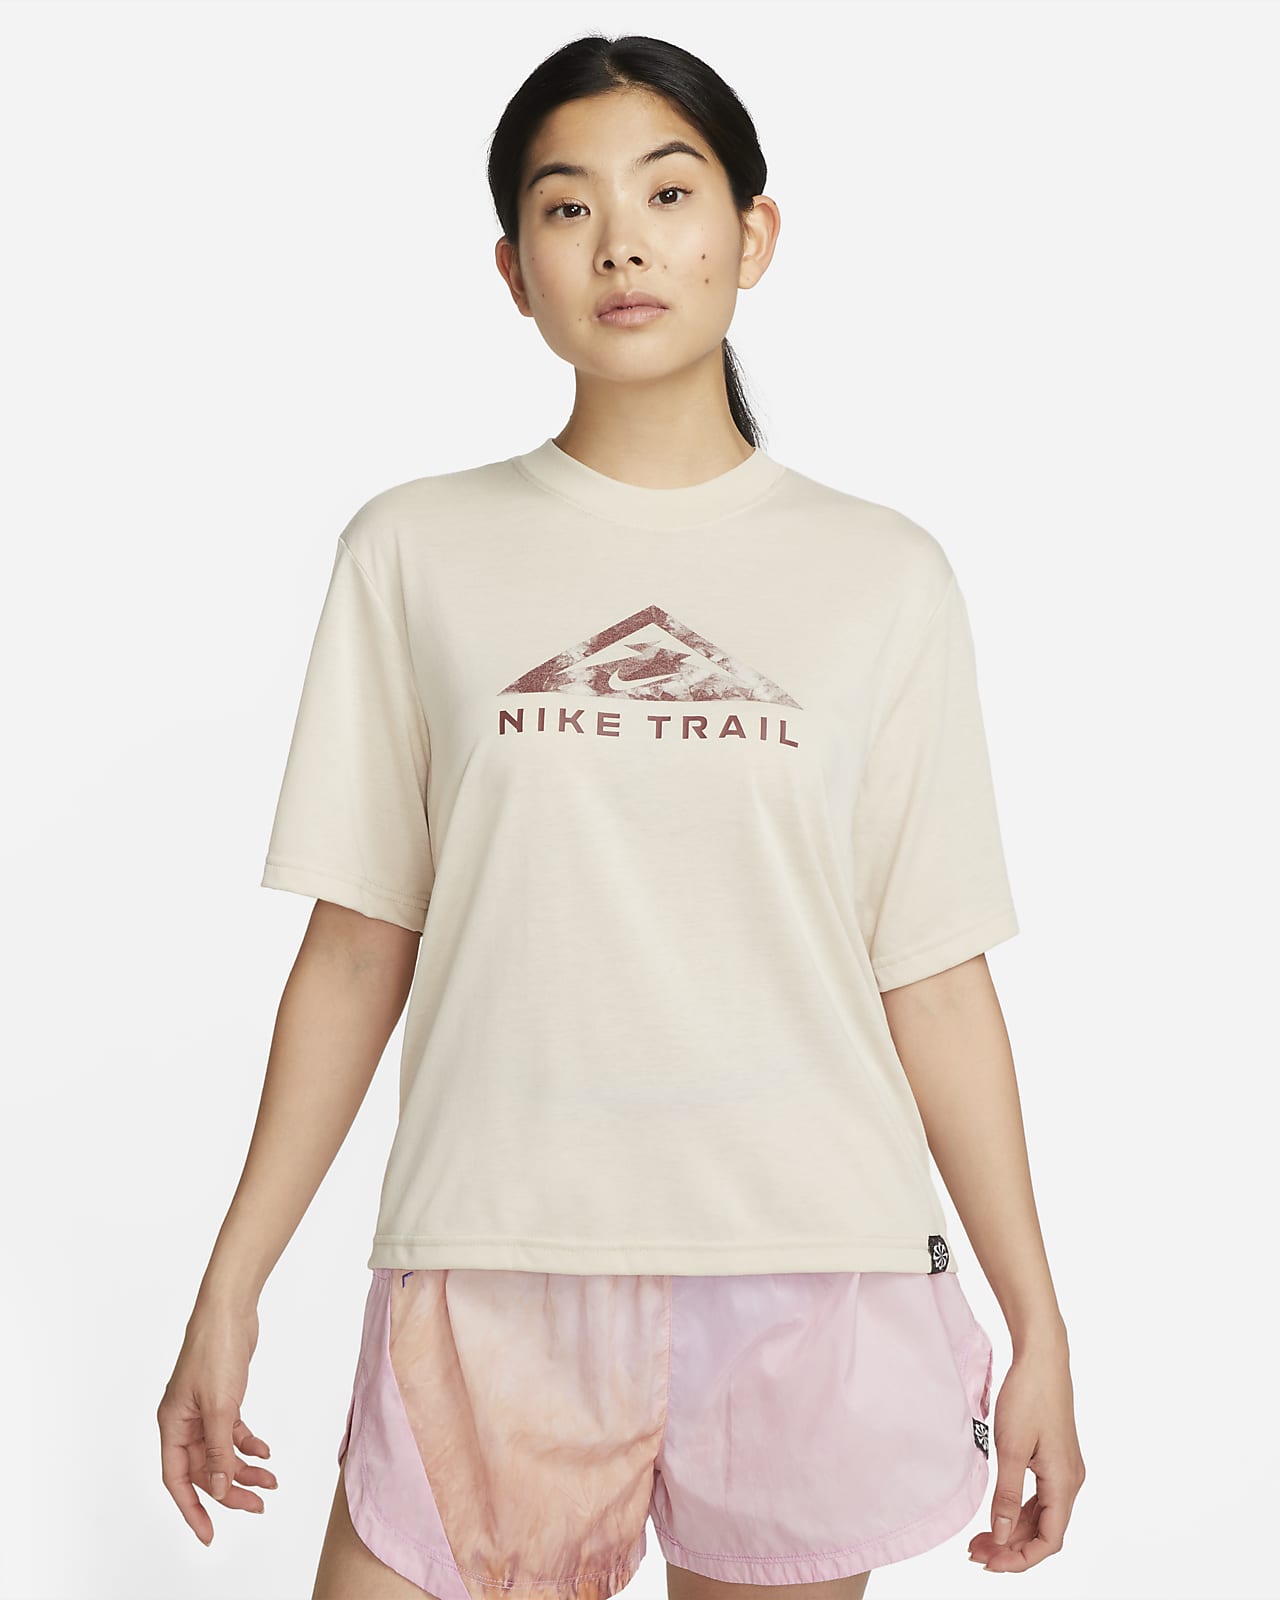 Nike Dri-FIT Trail Women's Short-Sleeve Tee